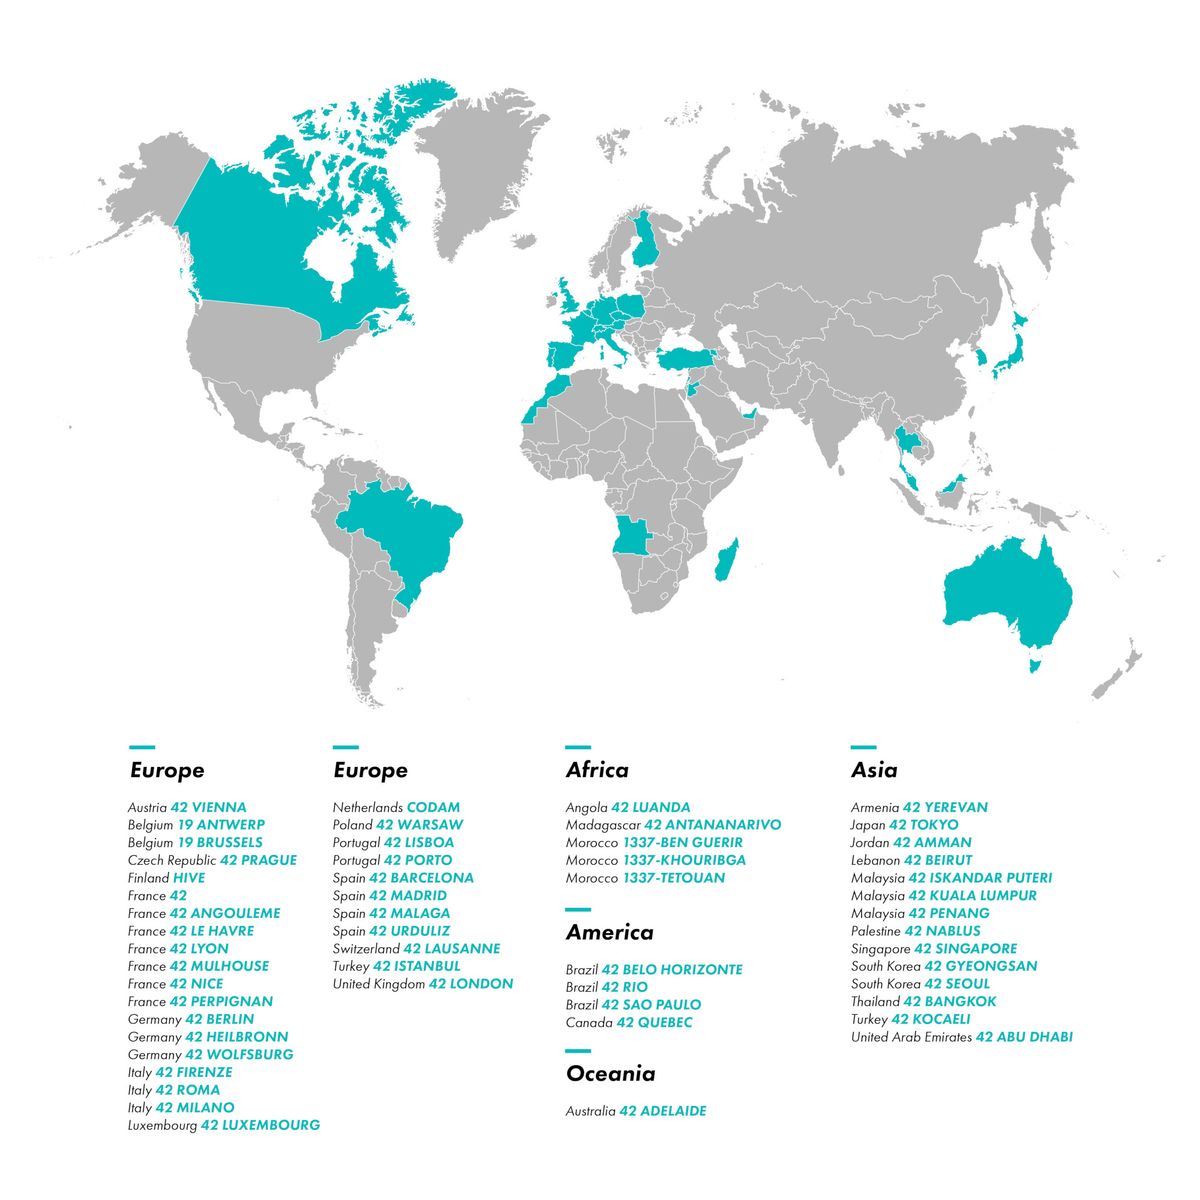 42 campuses around the world